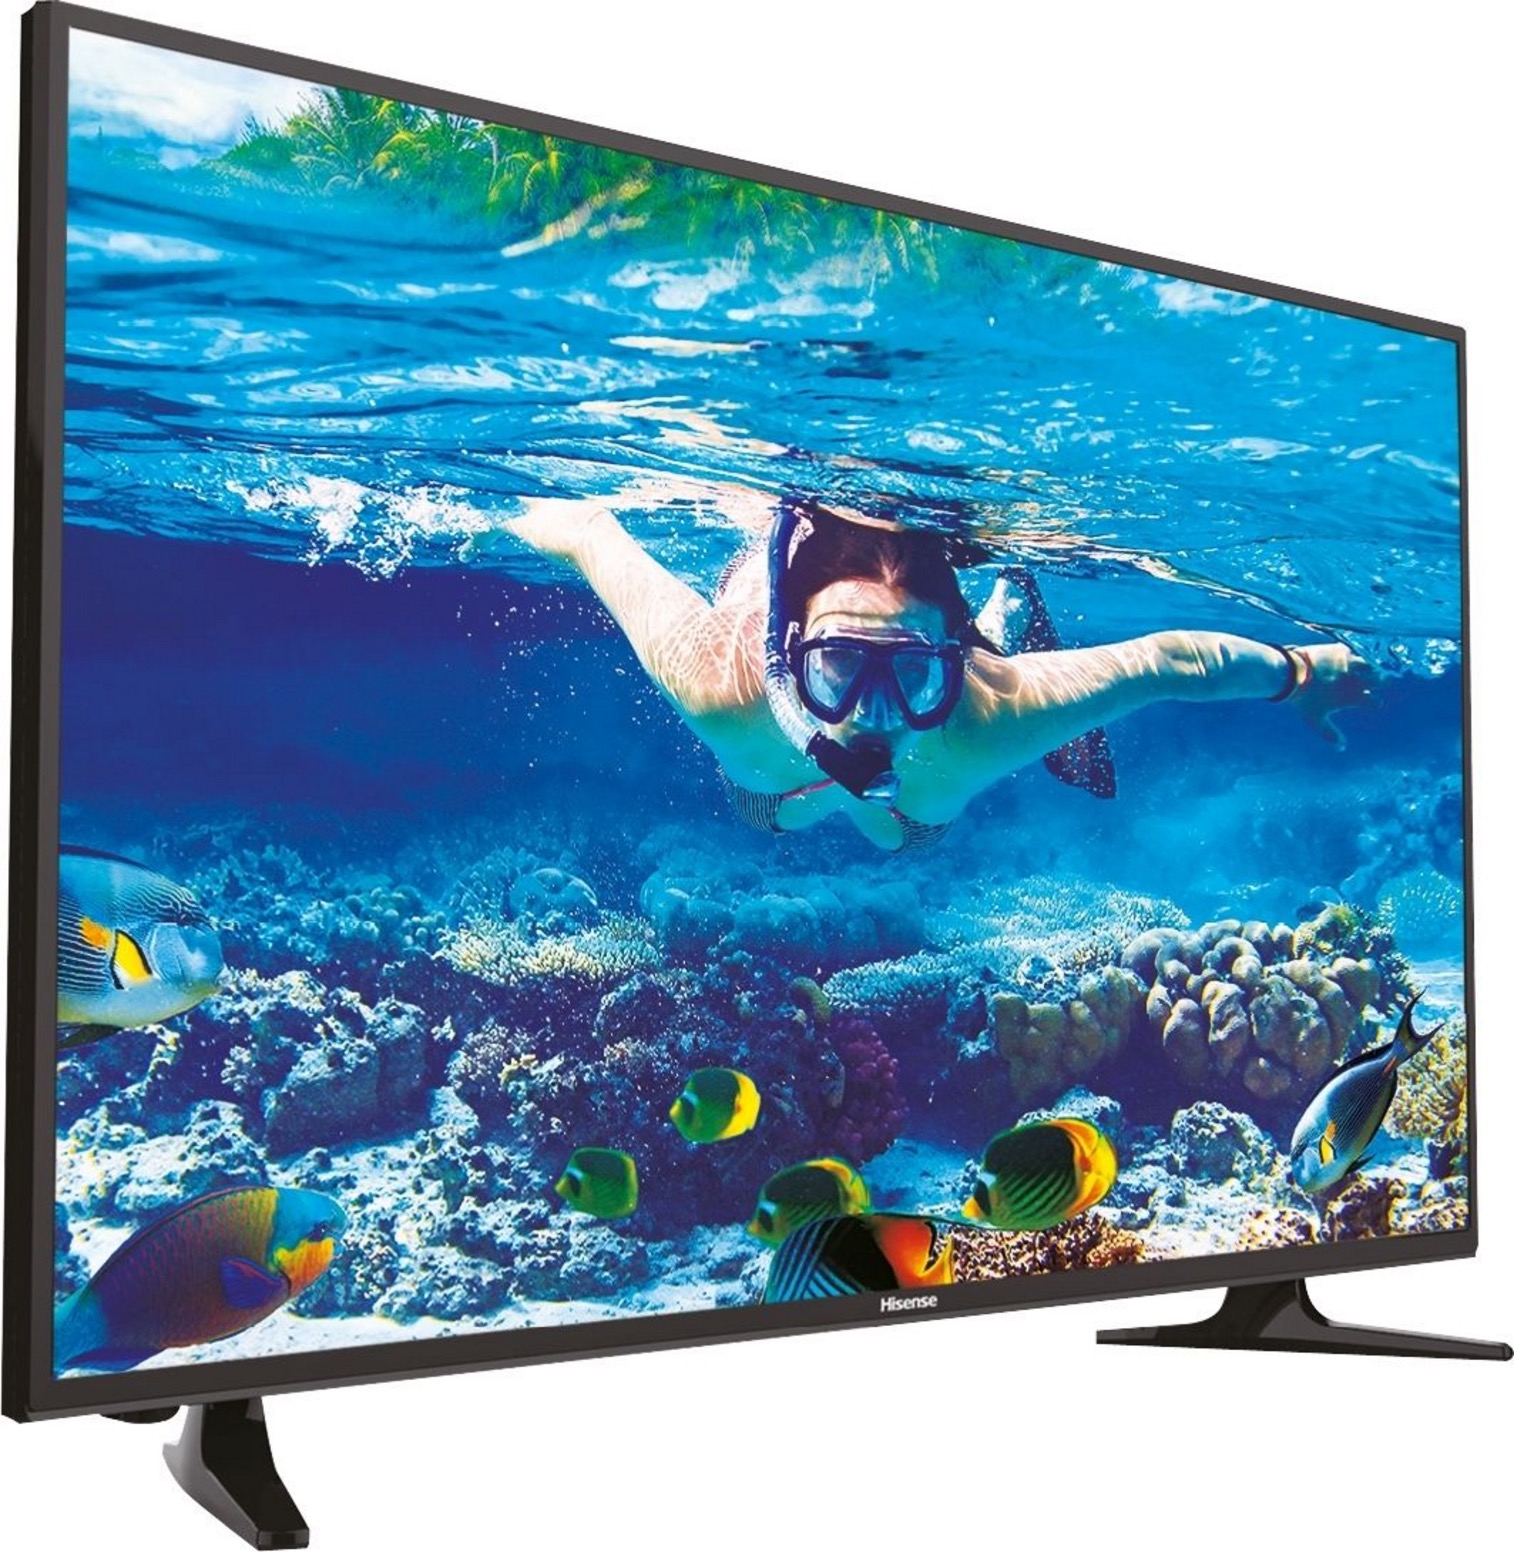 Hisense LTDN40D50 40 Zoll Fernseher (Full HD, Triple Tuner) [Energieklasse A] für nur 229,90 Euro inkl. Versand